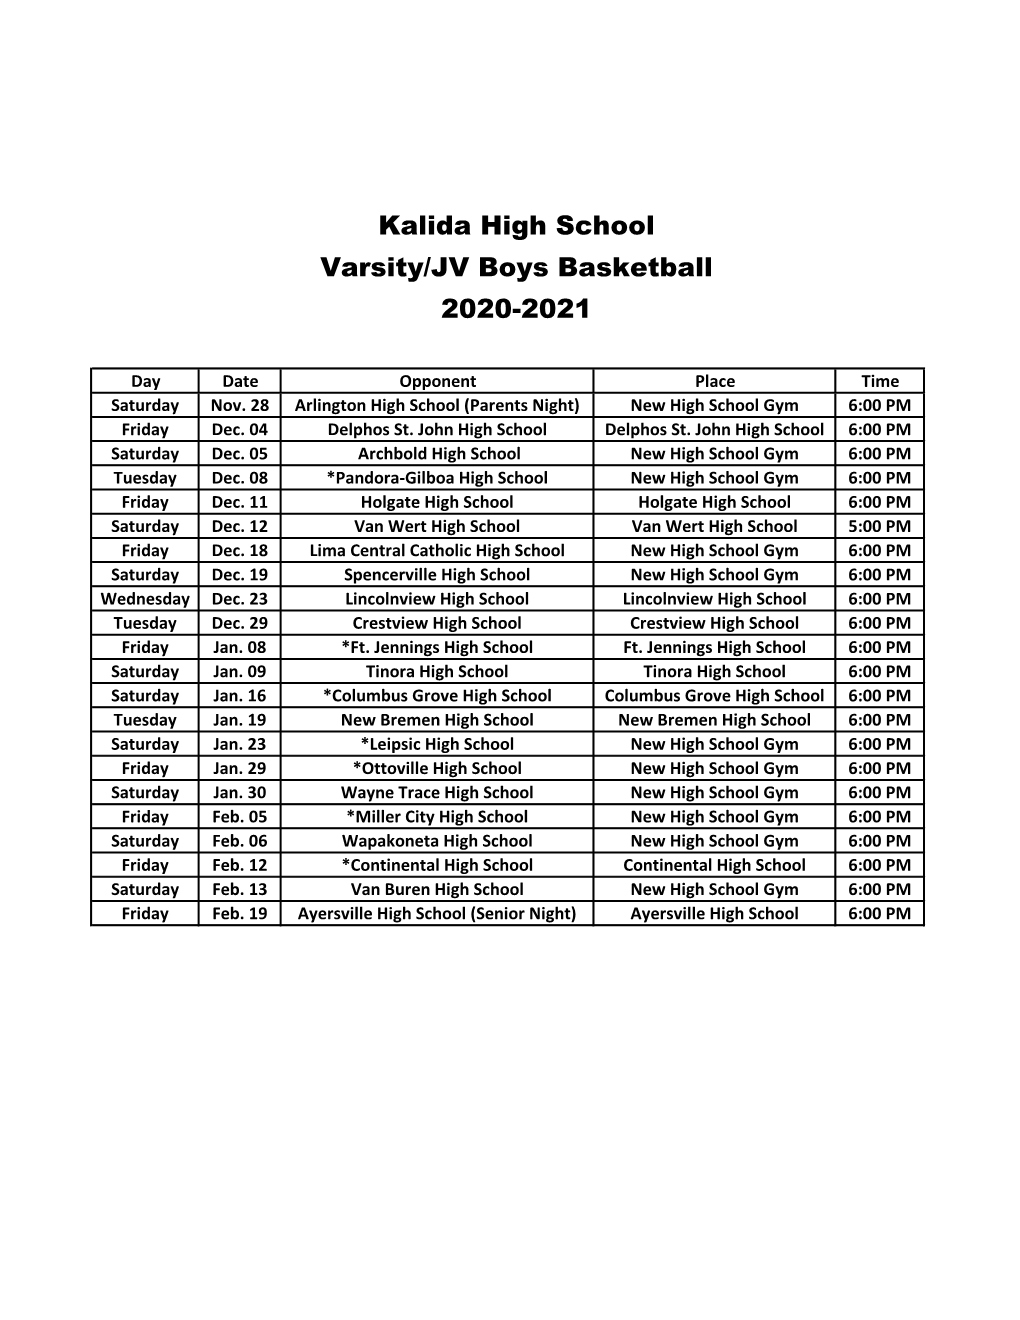 Kalida High School Varsity/JV Boys Basketball 2020-2021